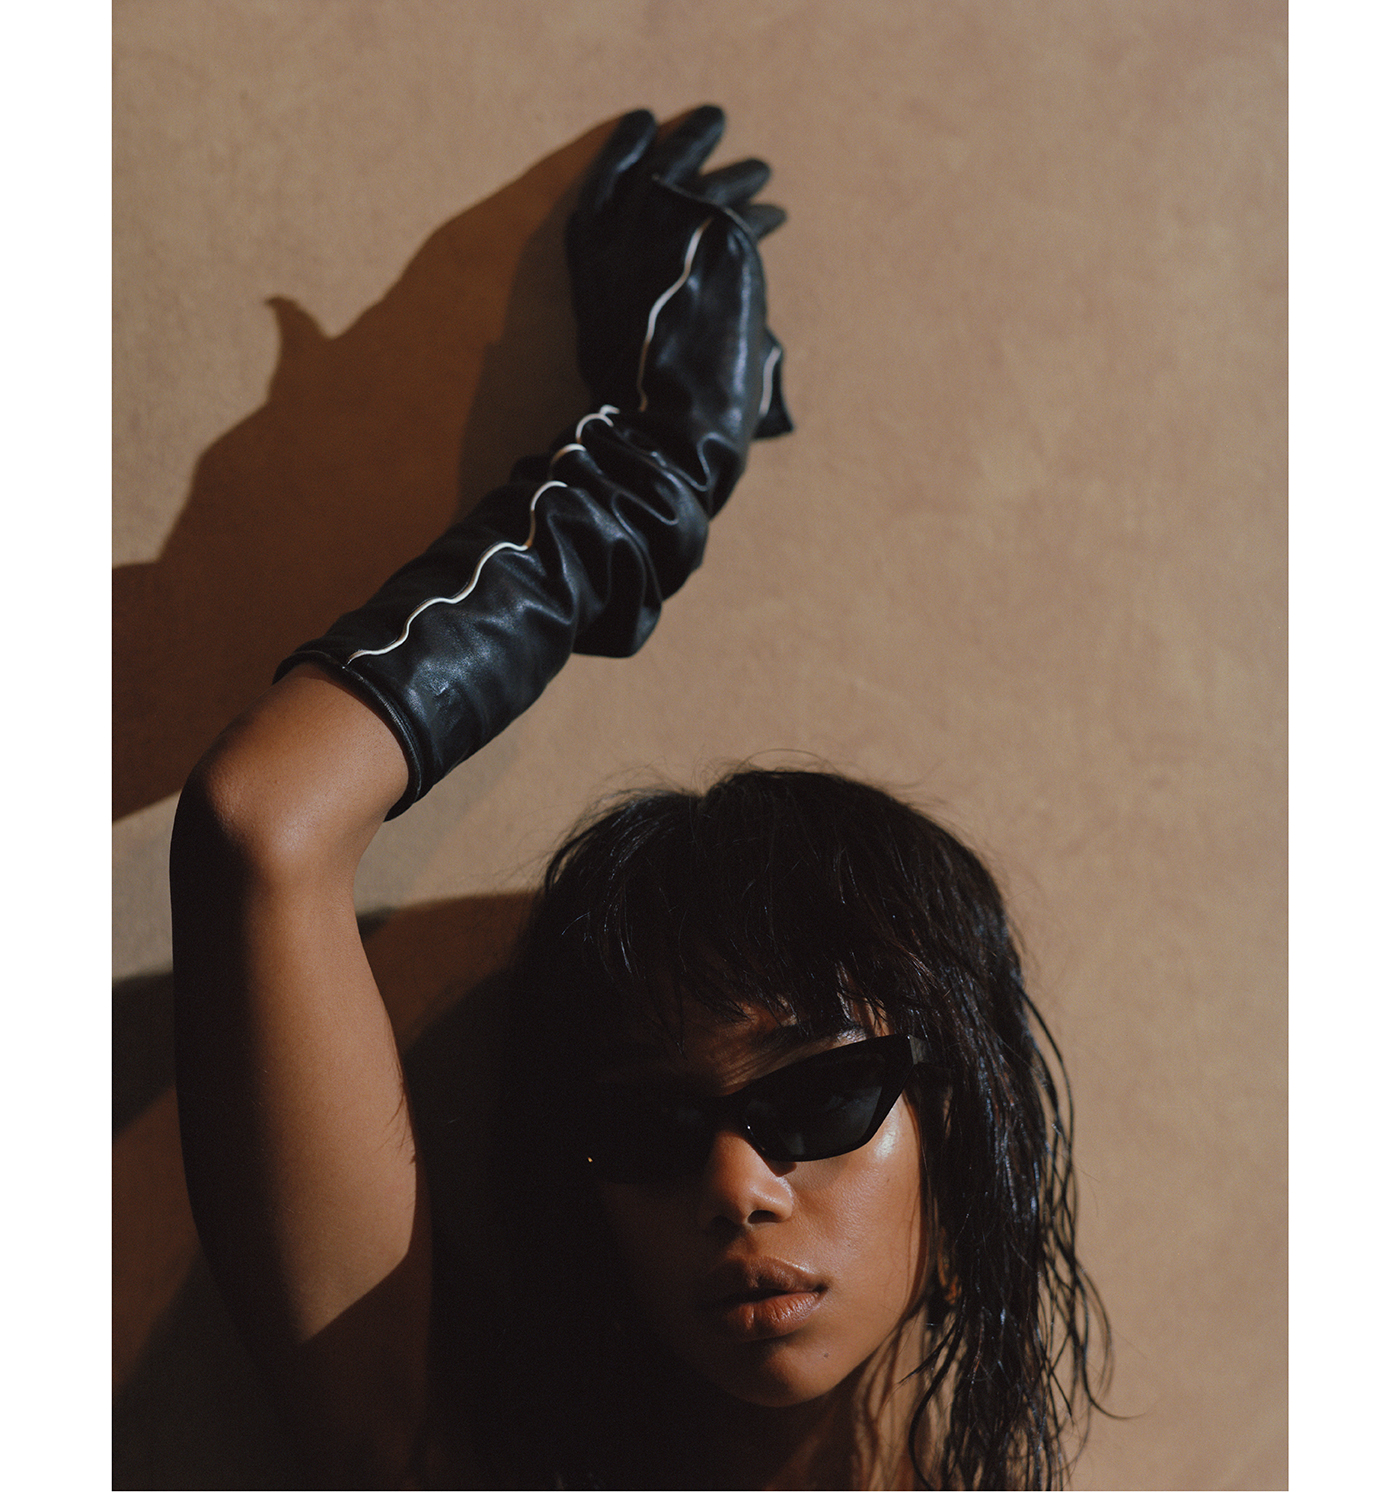 Sunglasses by Alain Mikli. Glove by Louis Vuitton.